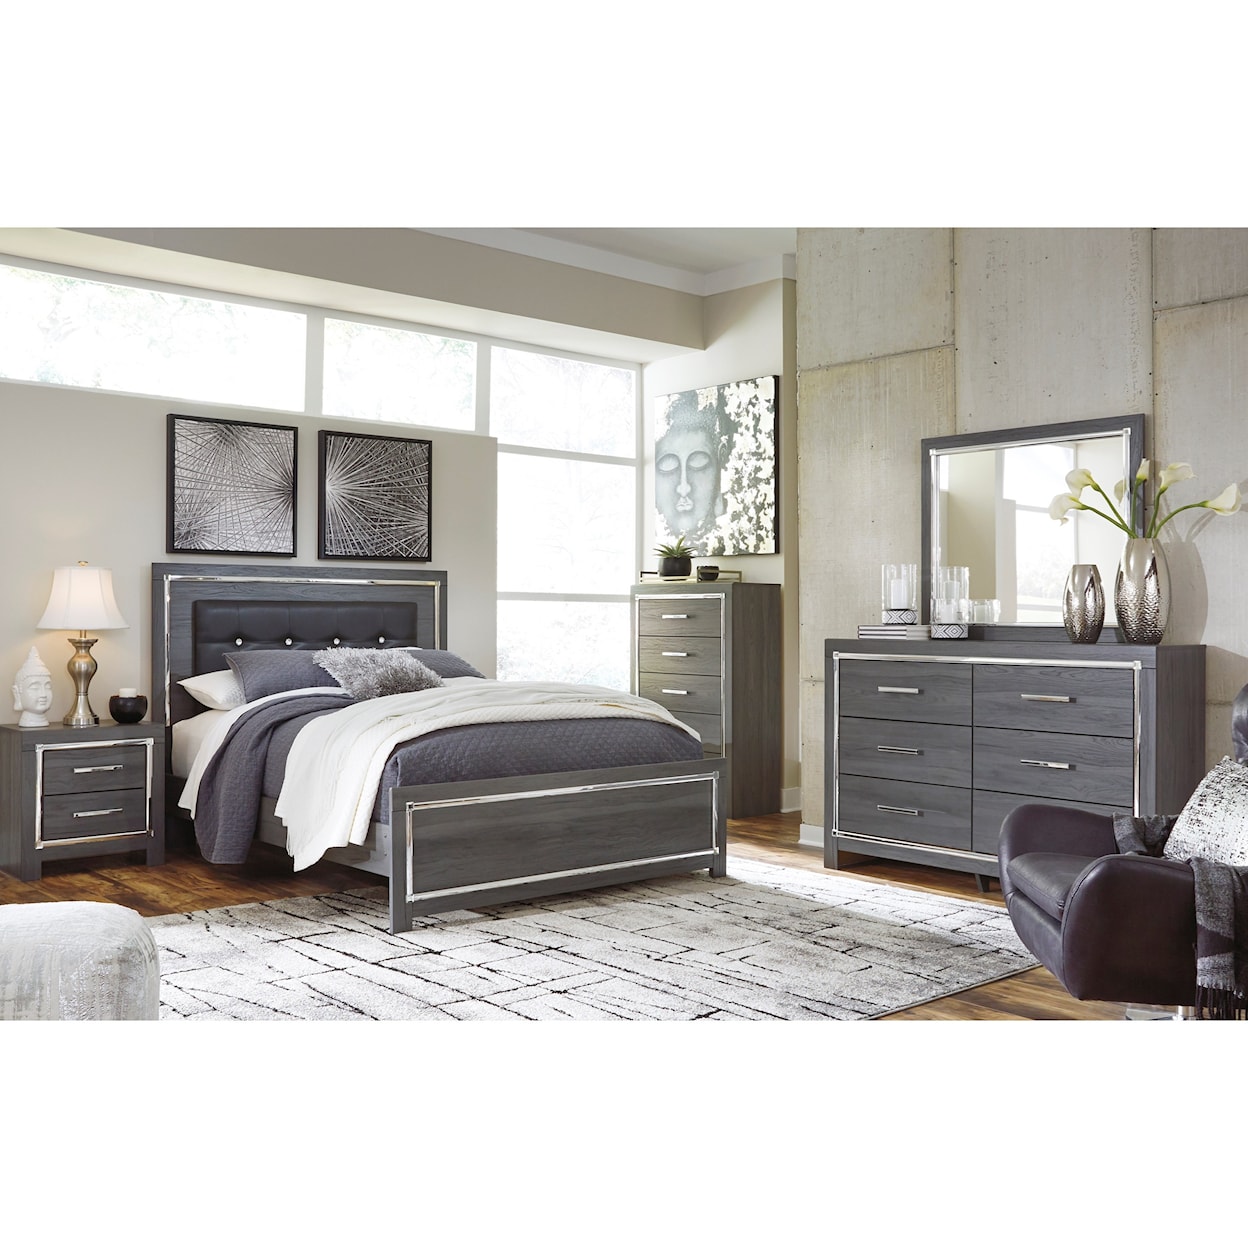 Ashley Furniture Signature Design Lodanna King Bedroom Group